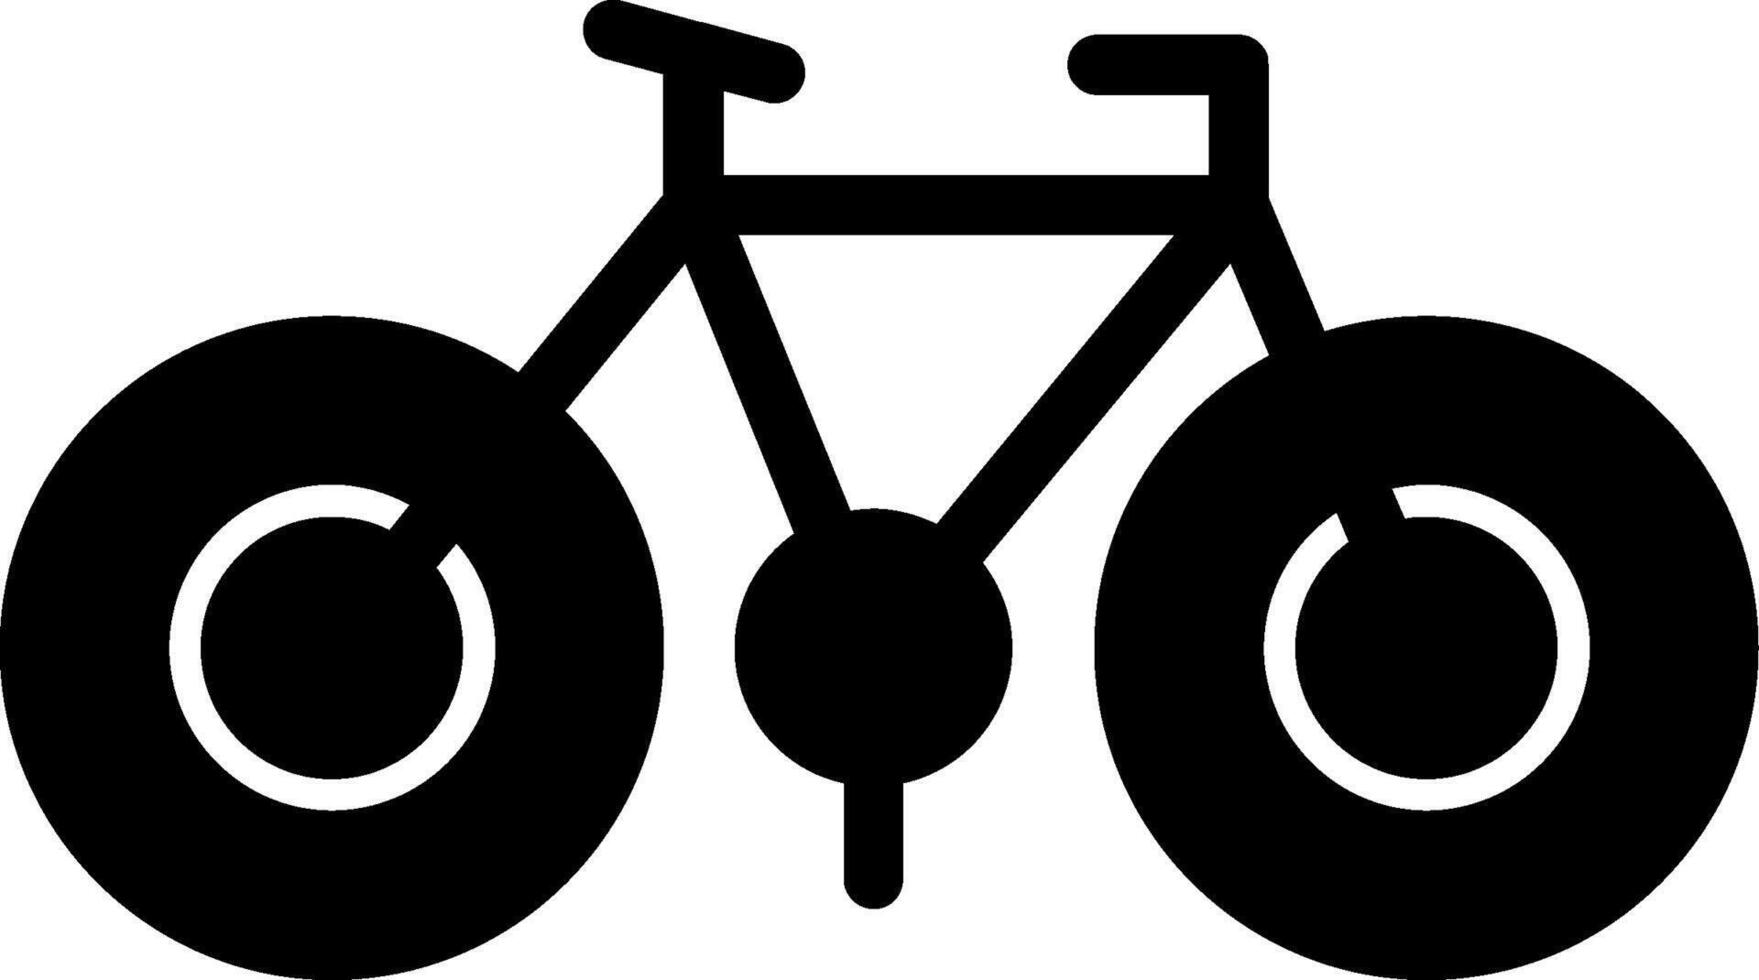 icono de glifo de bicicleta vector